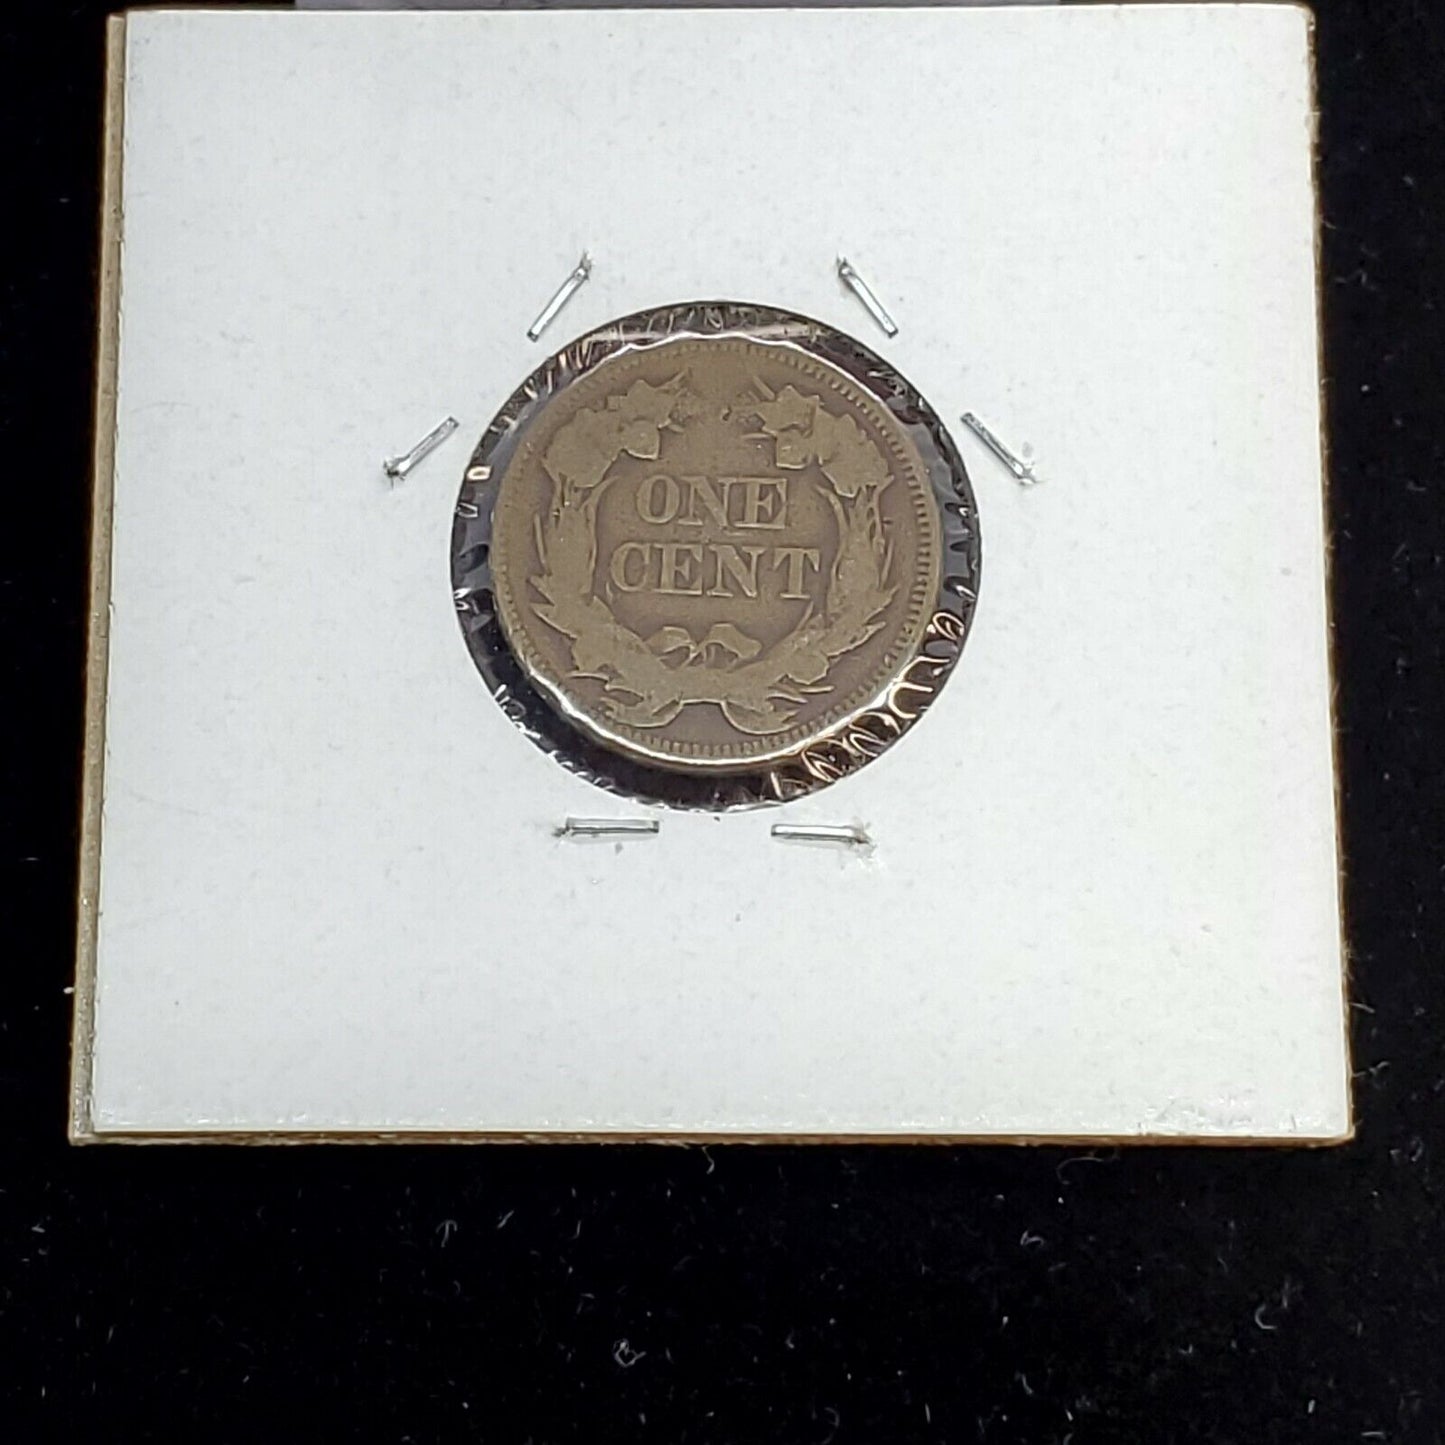 1857 Flying Eagle Cent Penny Coin CHOICE VG VERY GOOD Pre Civil War Era